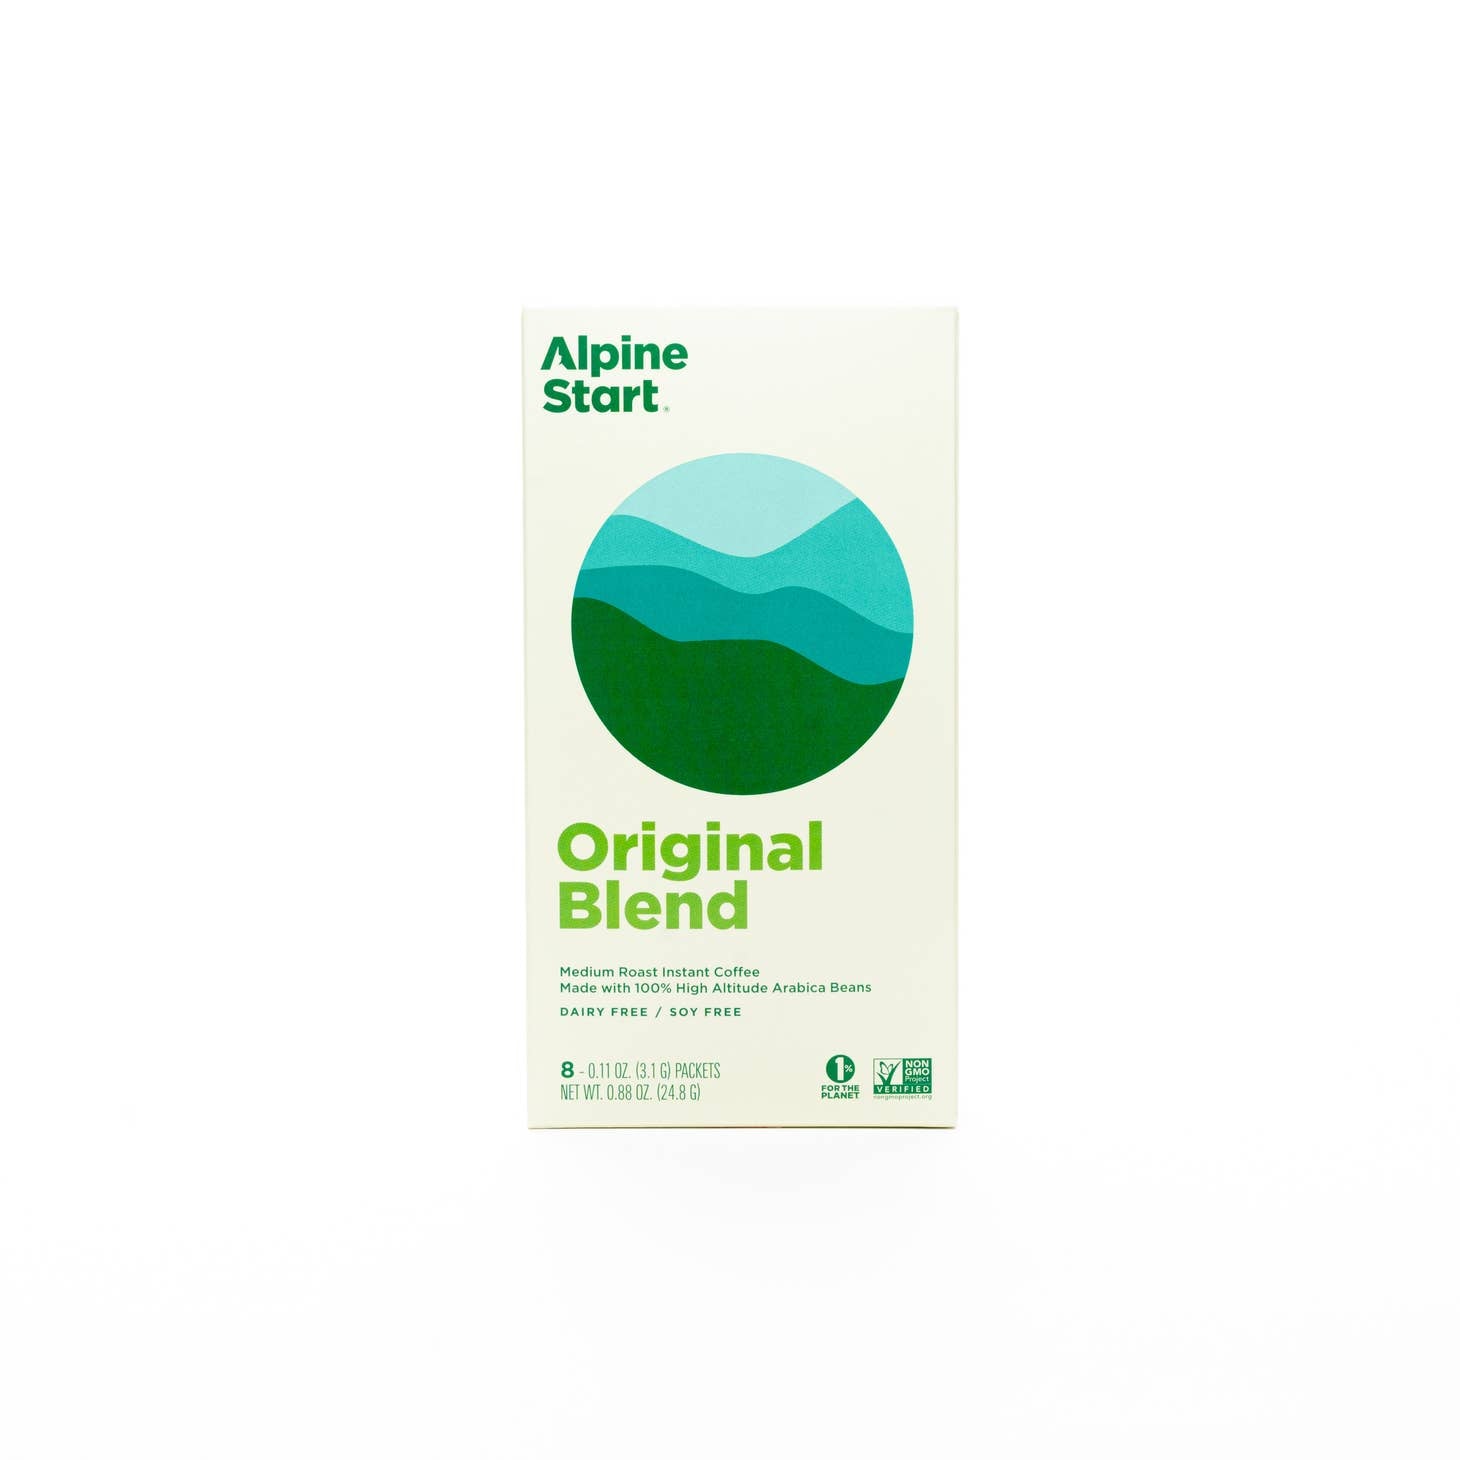 Alpine Start Original Blend Instant Coffee Pack